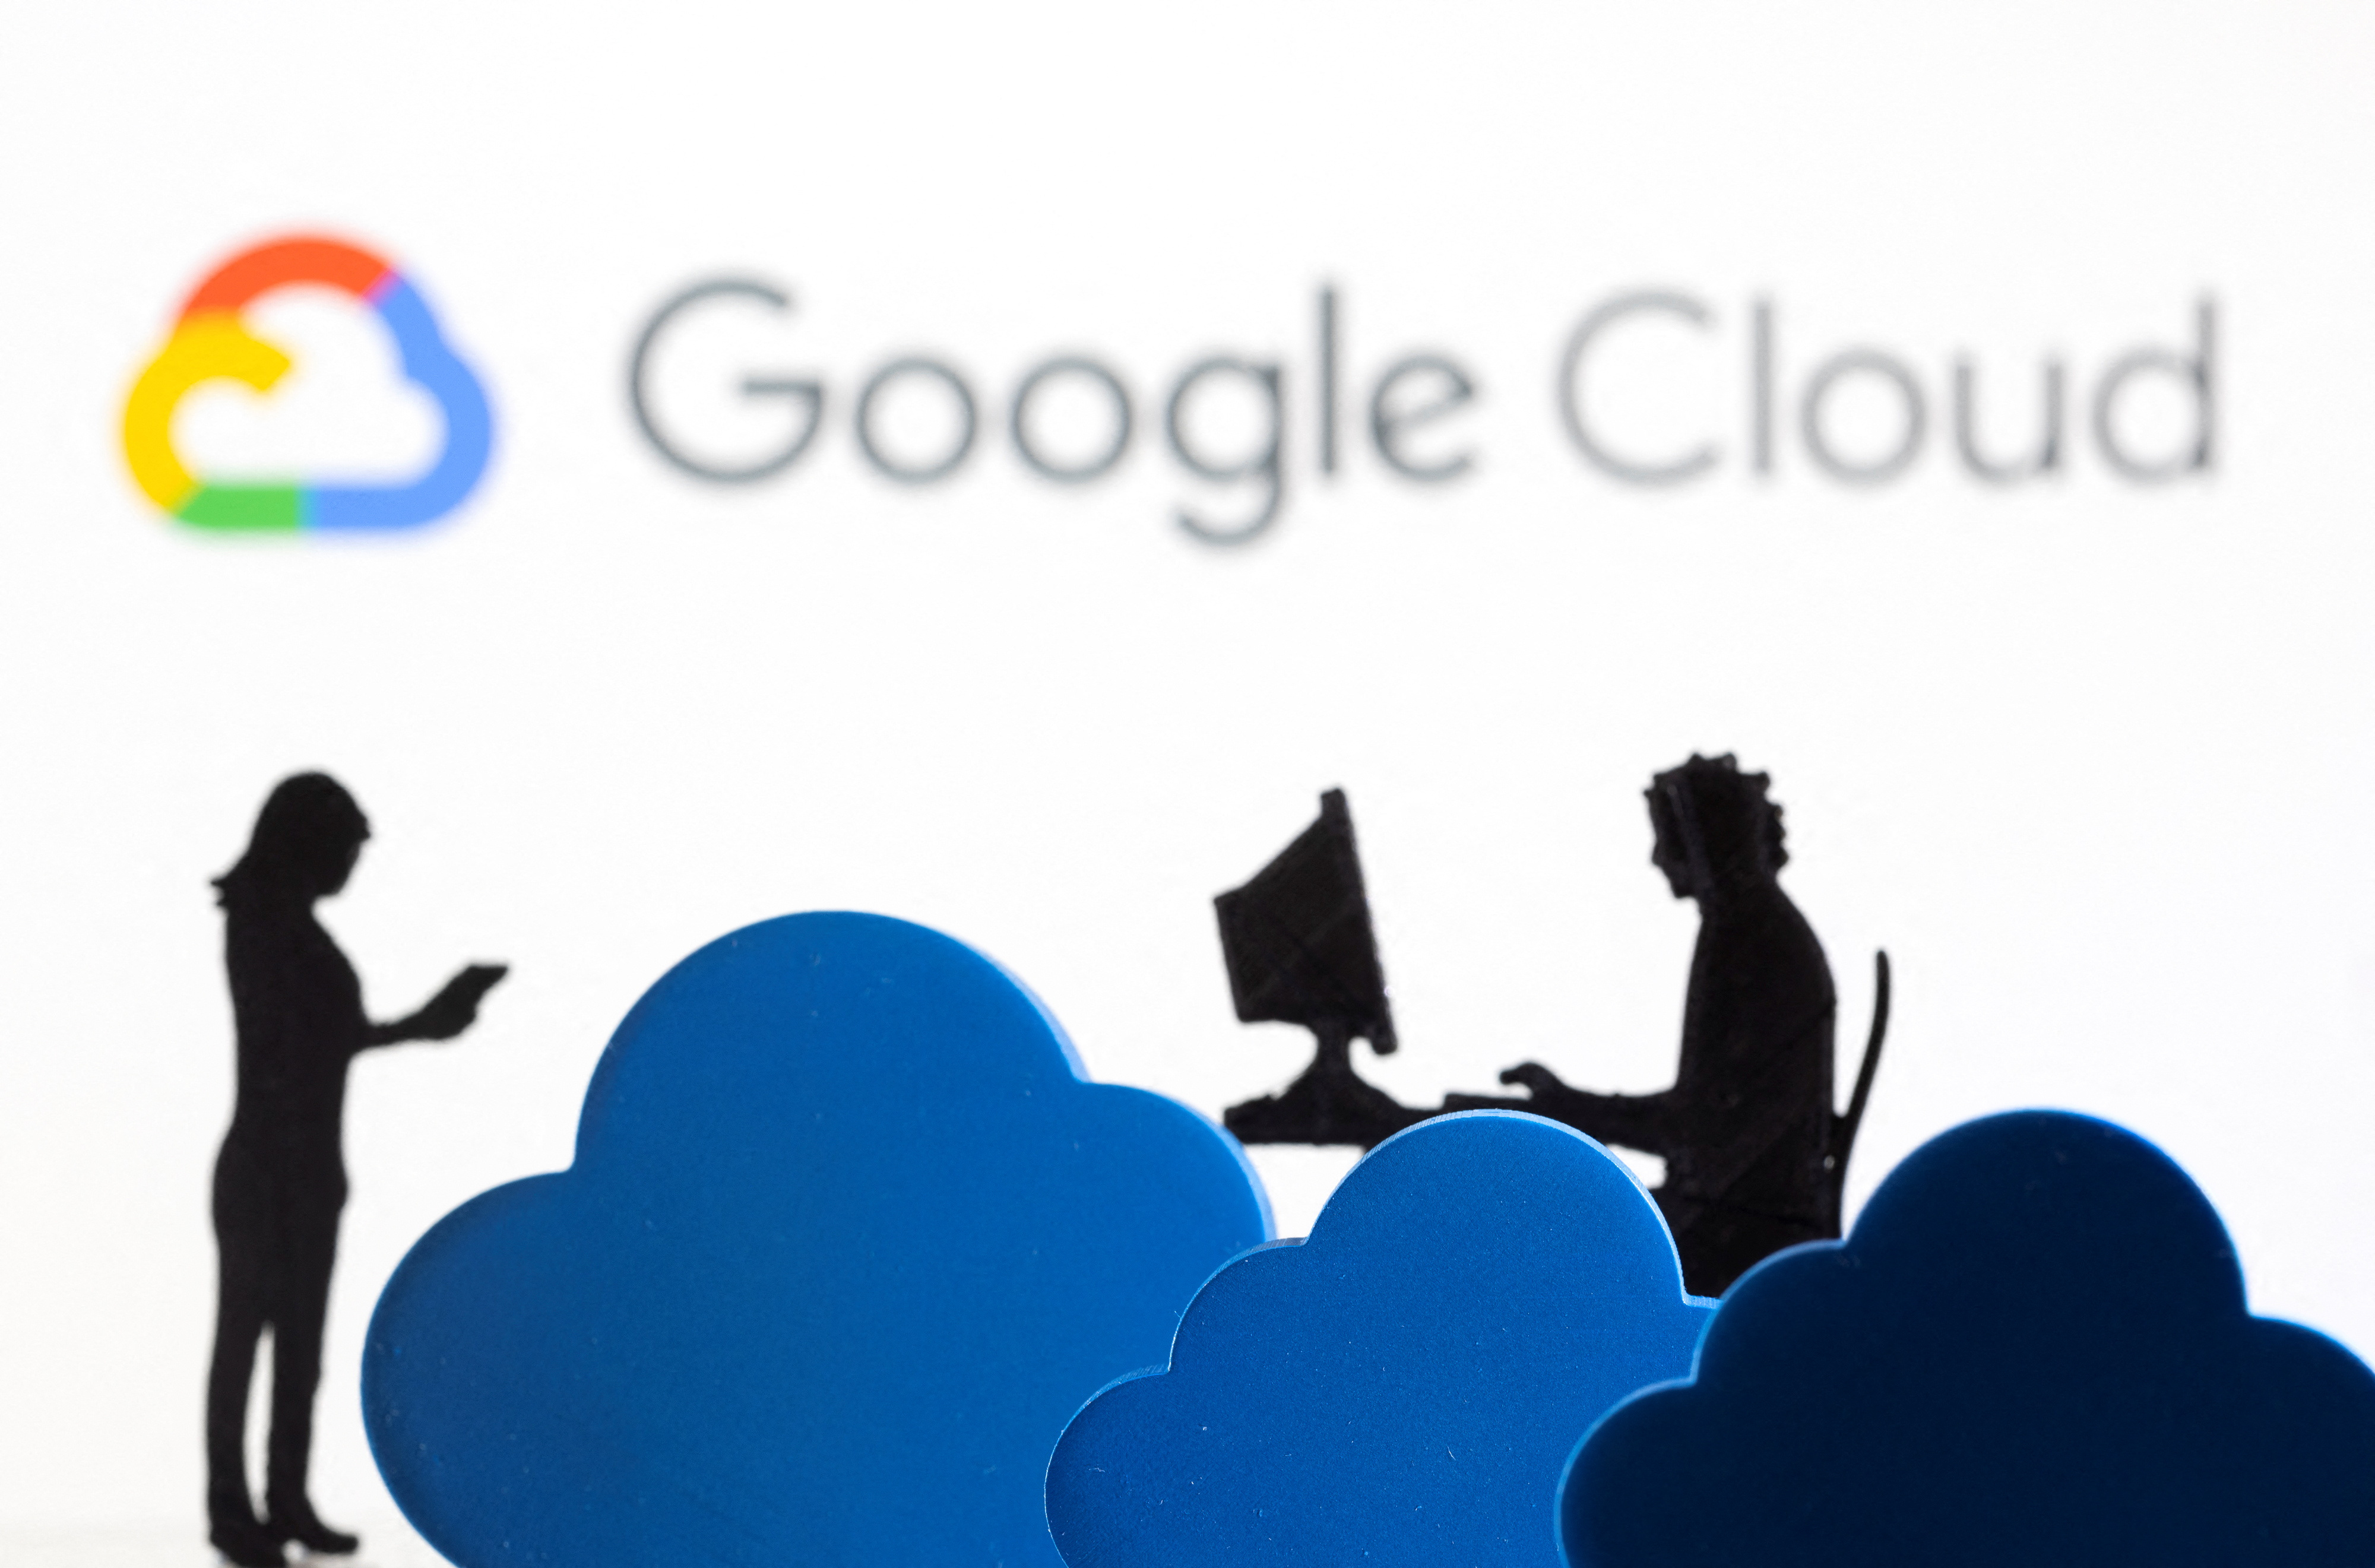 Illustration shows Google Cloud service logo